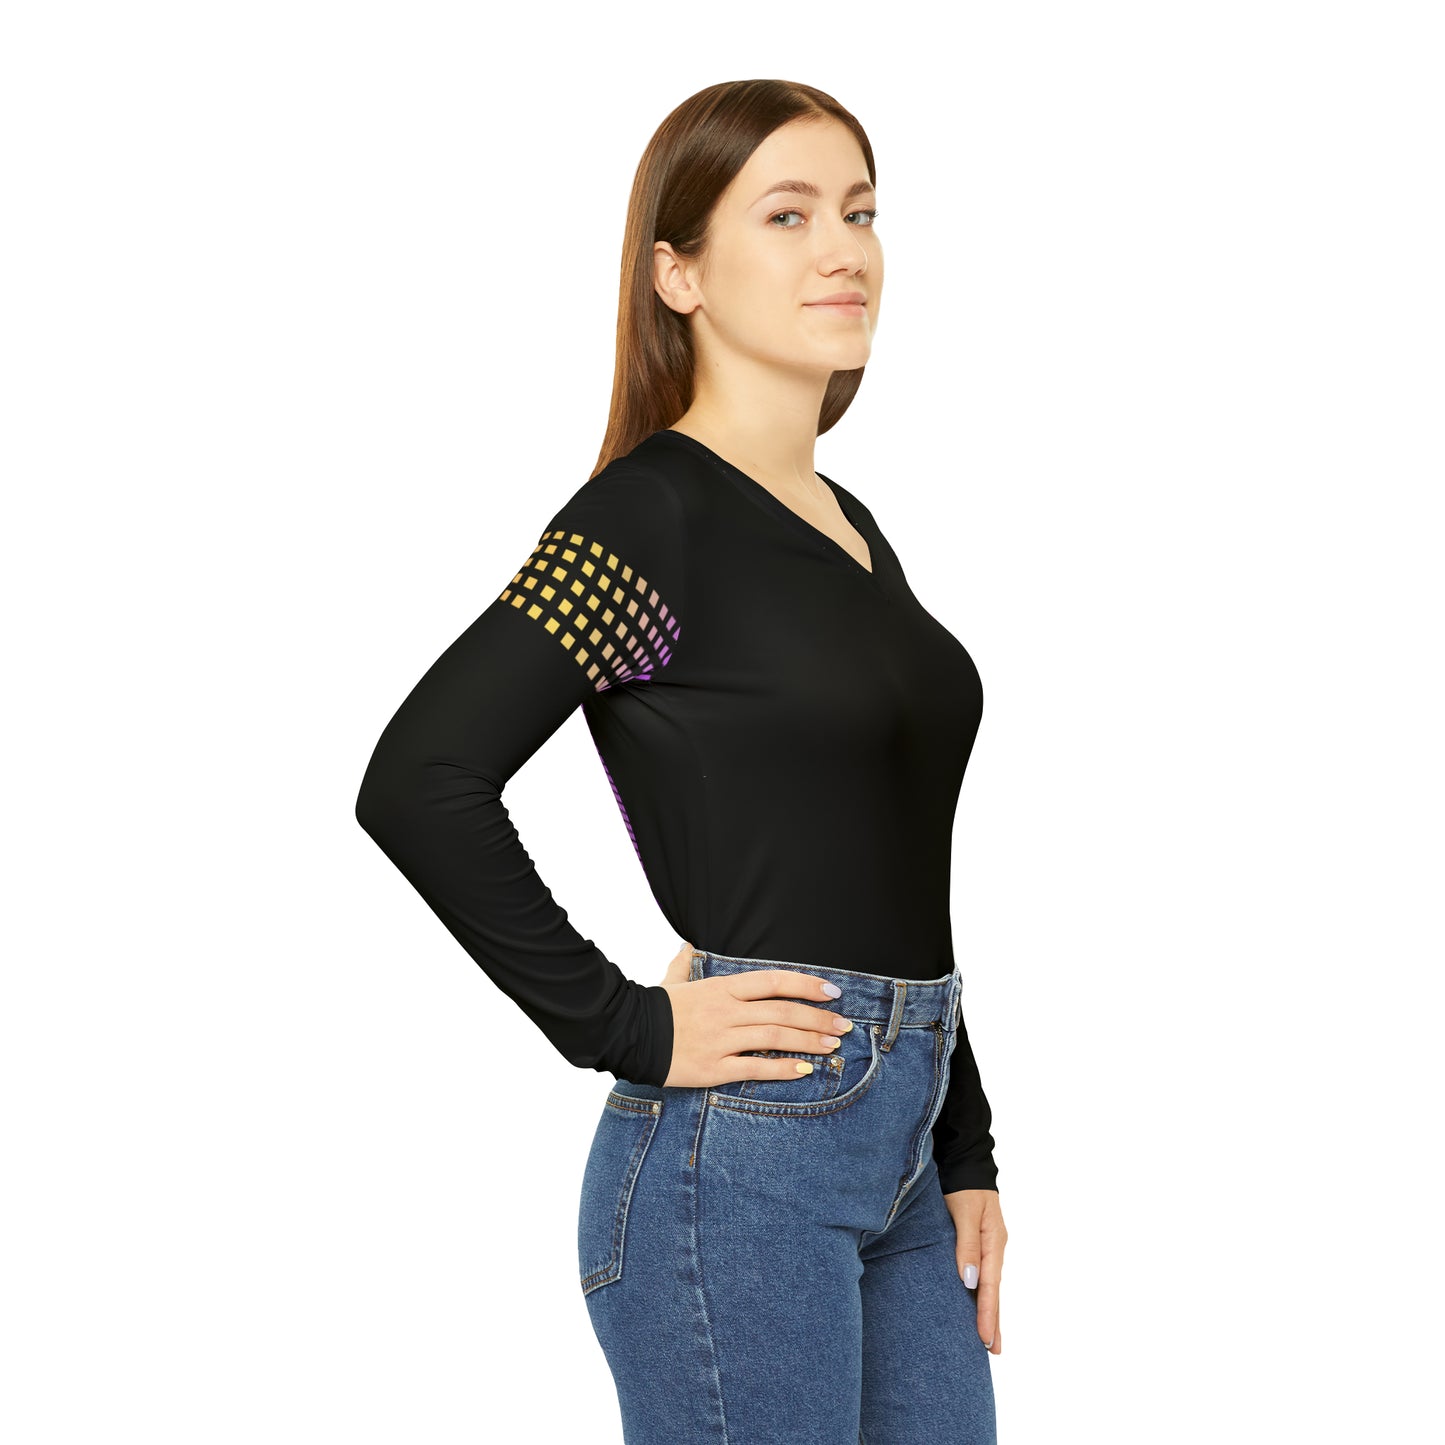 Paladin Punks Women's Long Sleeve V-neck Shirt Black Sublimation Dye